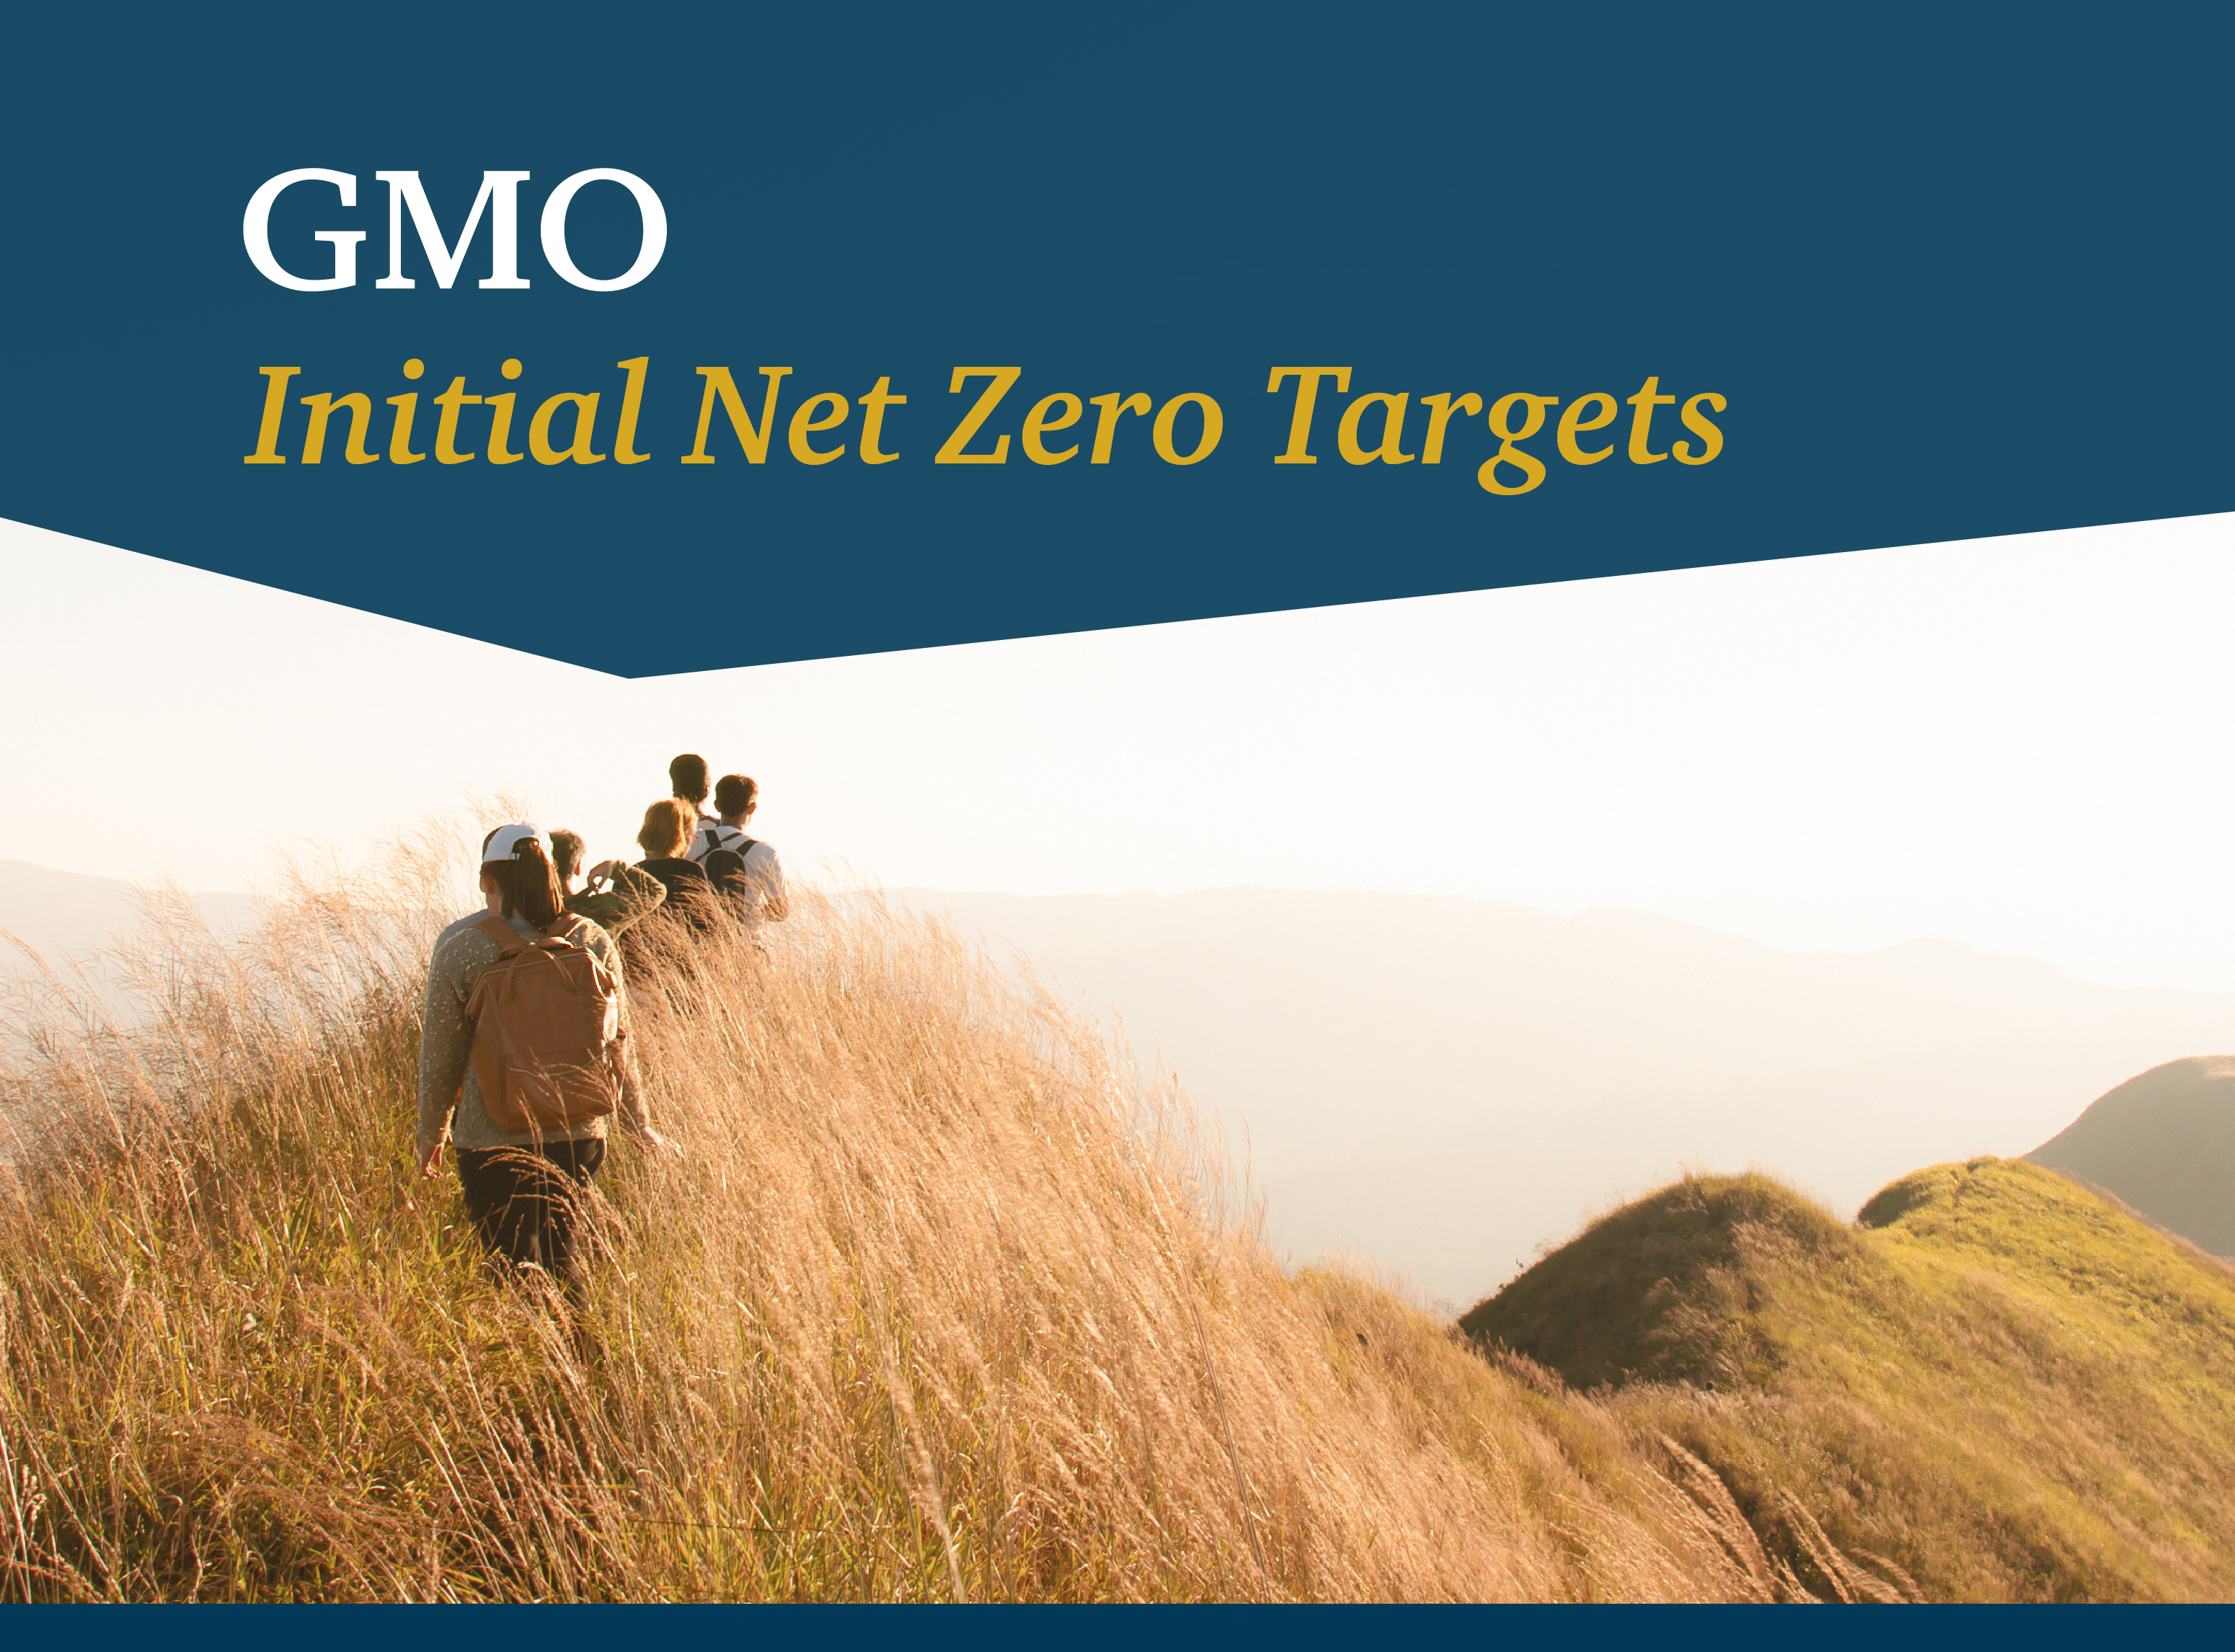 GMO Announces Initial Net Zero Asset Targets_11-22-01